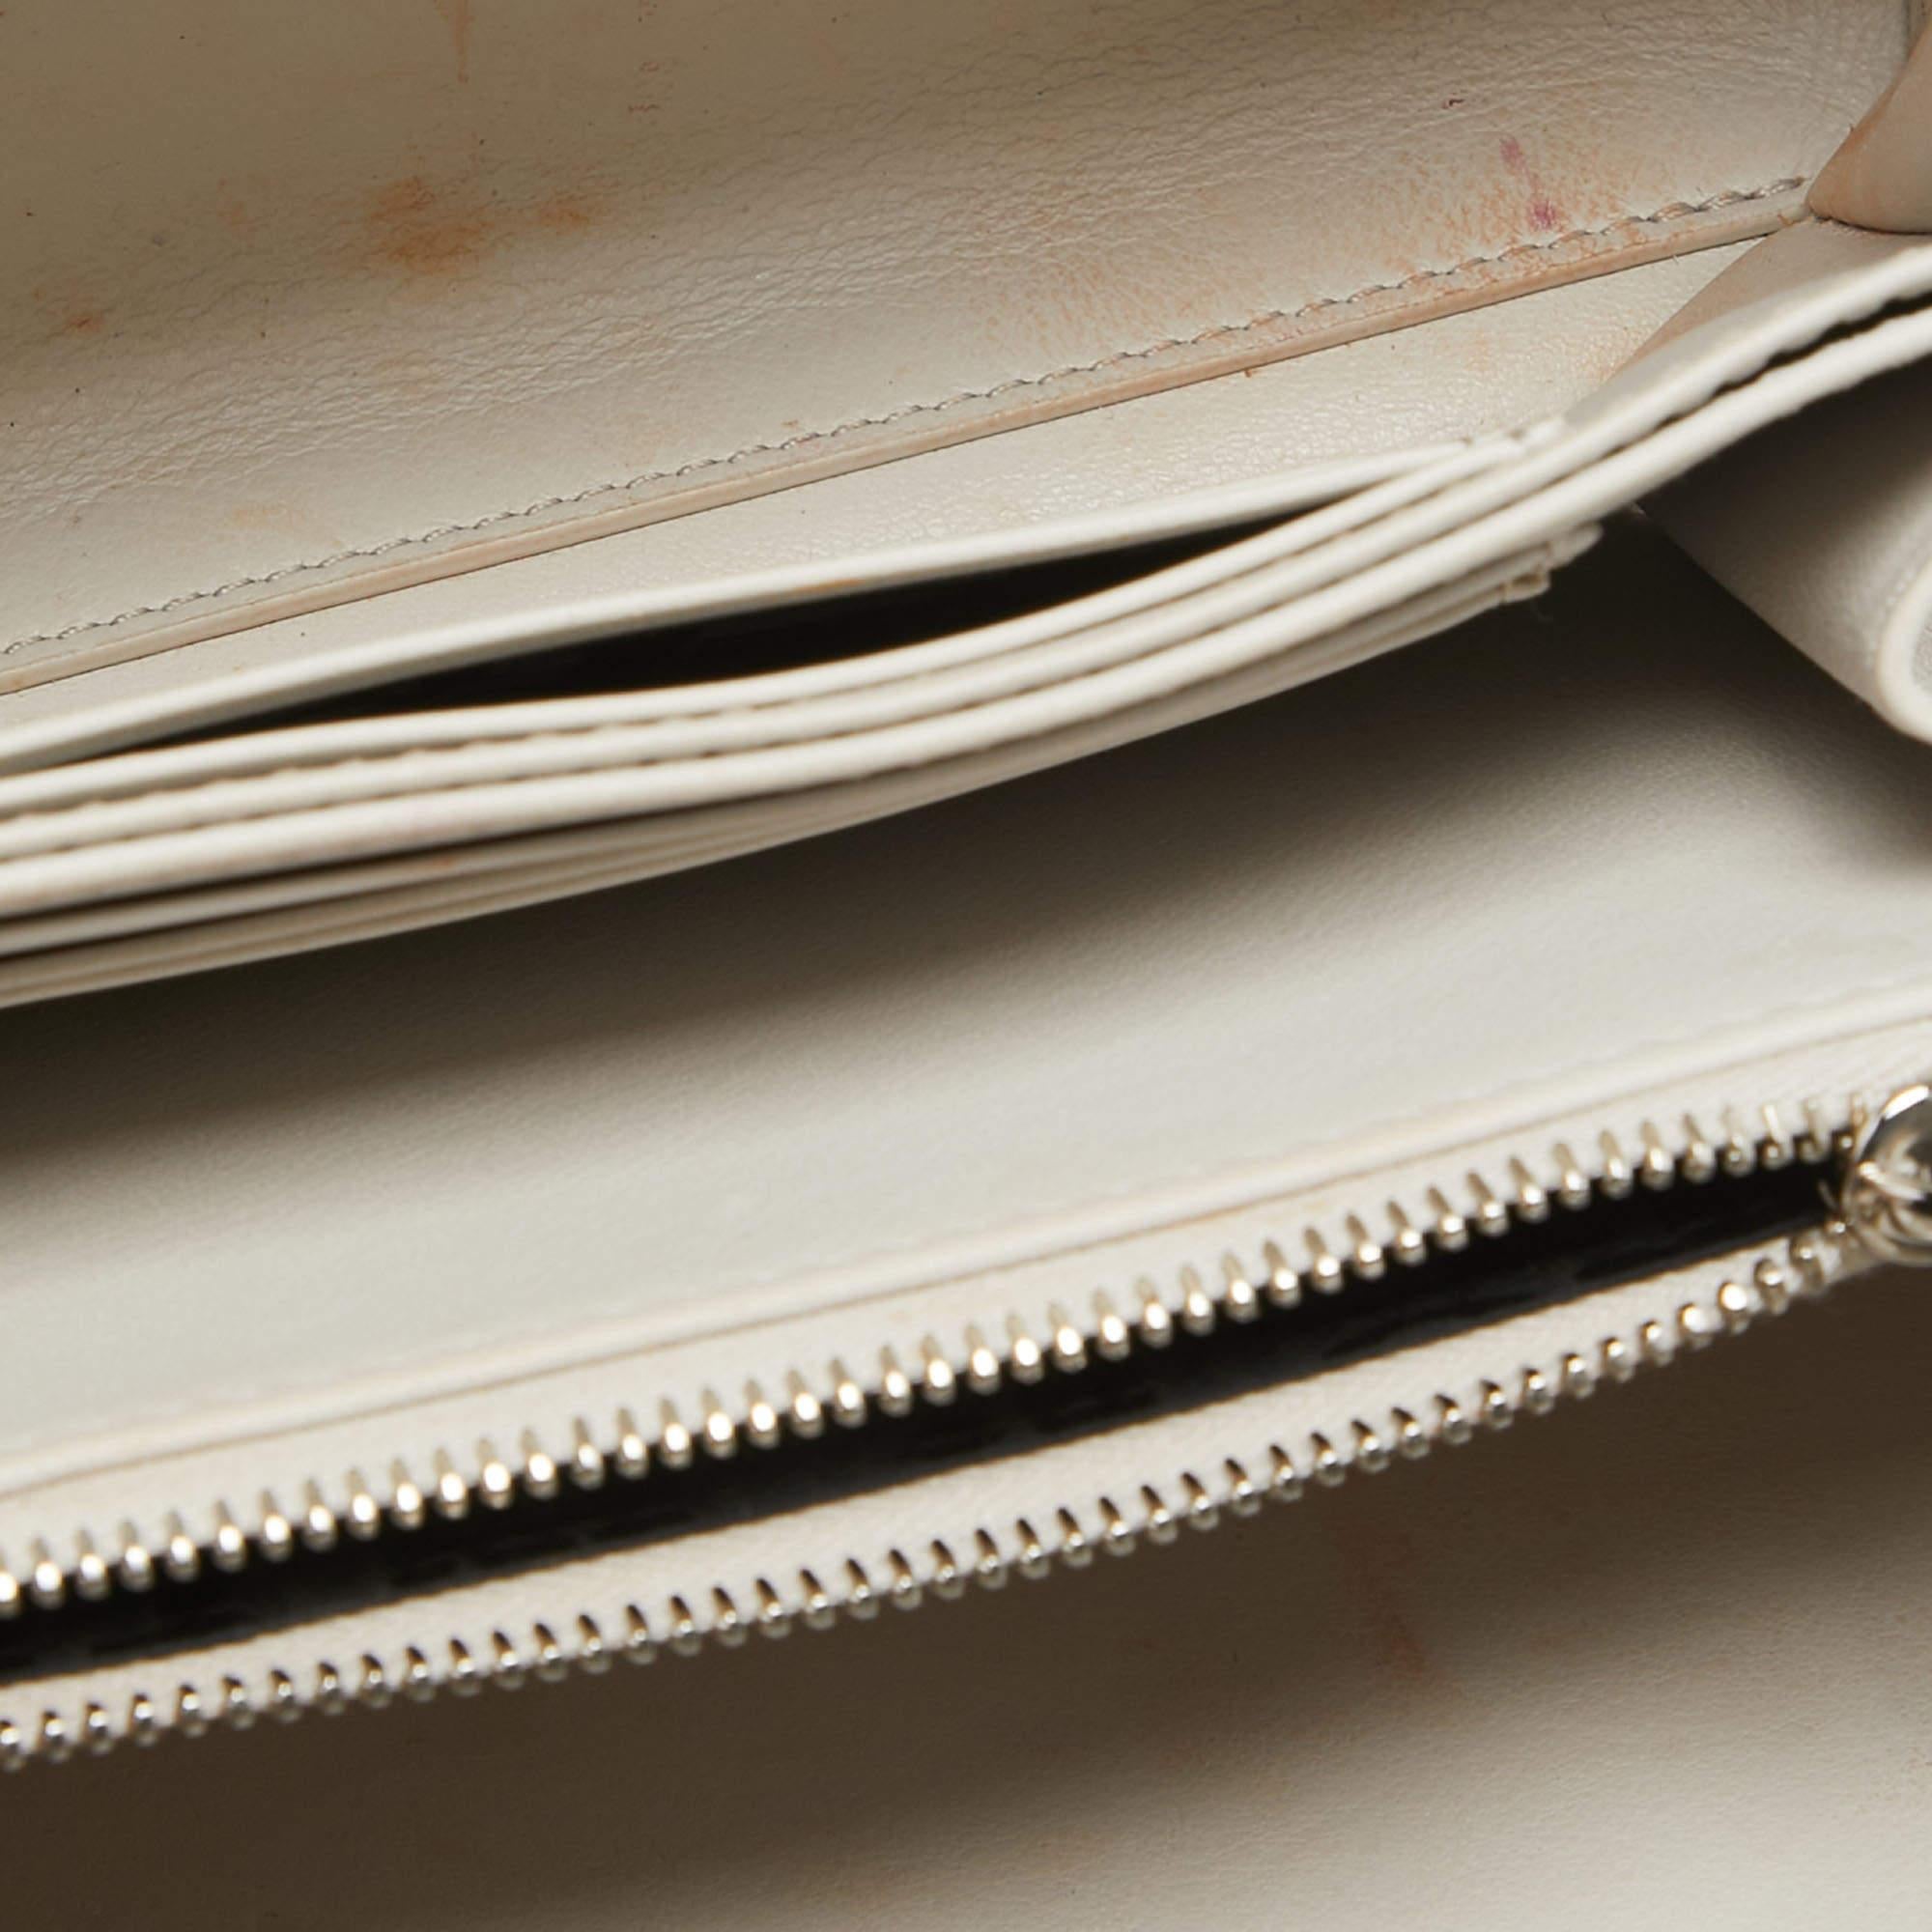 Dior x Rimowa Off White/Grey Aluminum and Leather Personal Clutch Bag In Good Condition For Sale In Dubai, Al Qouz 2